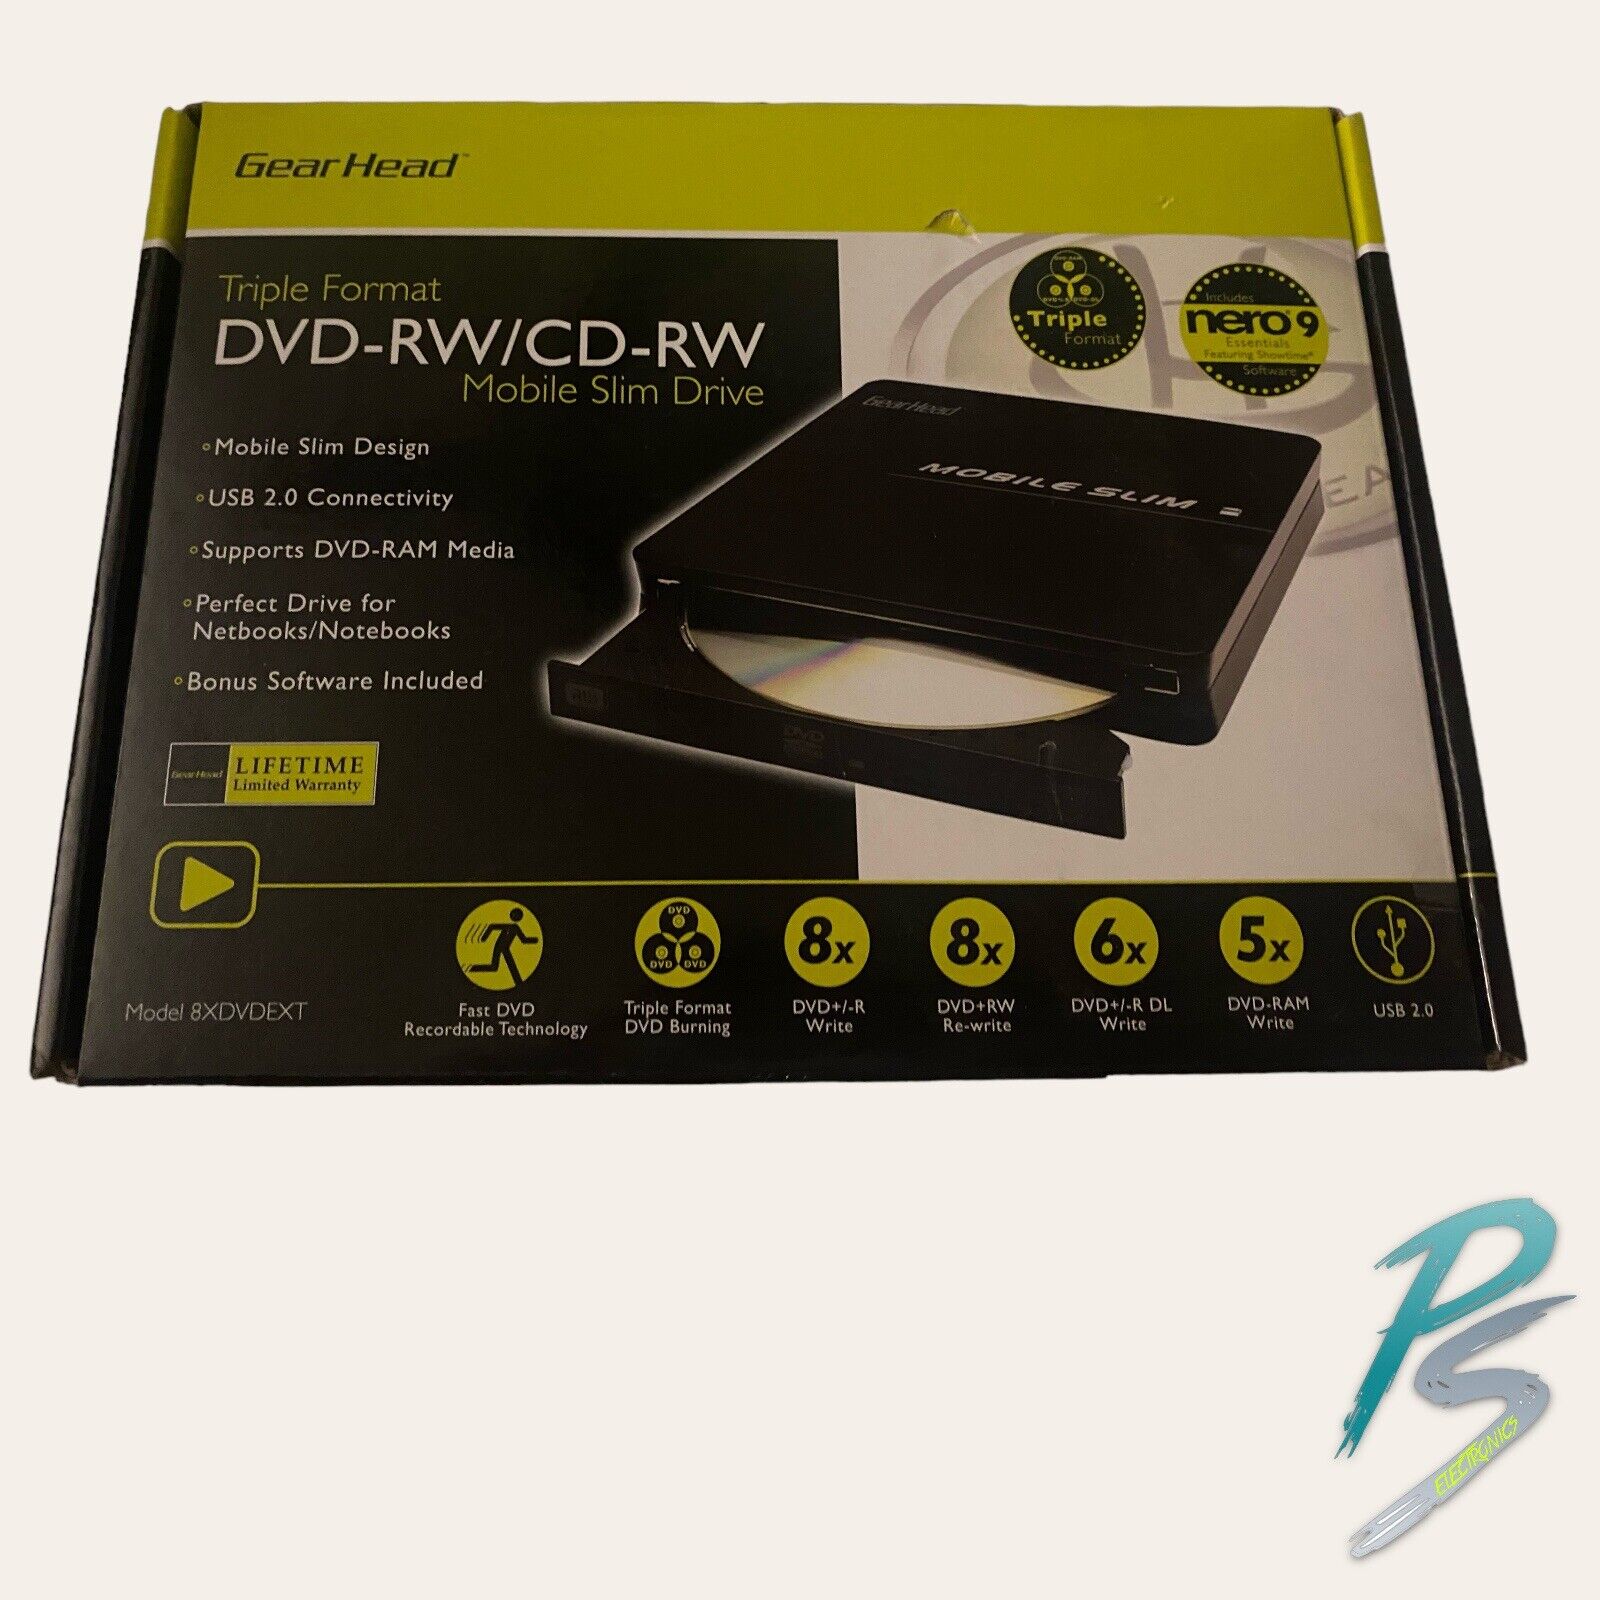 Gear Head Triple Format Dvd-RW/CD-RW Mobile Slim Drive